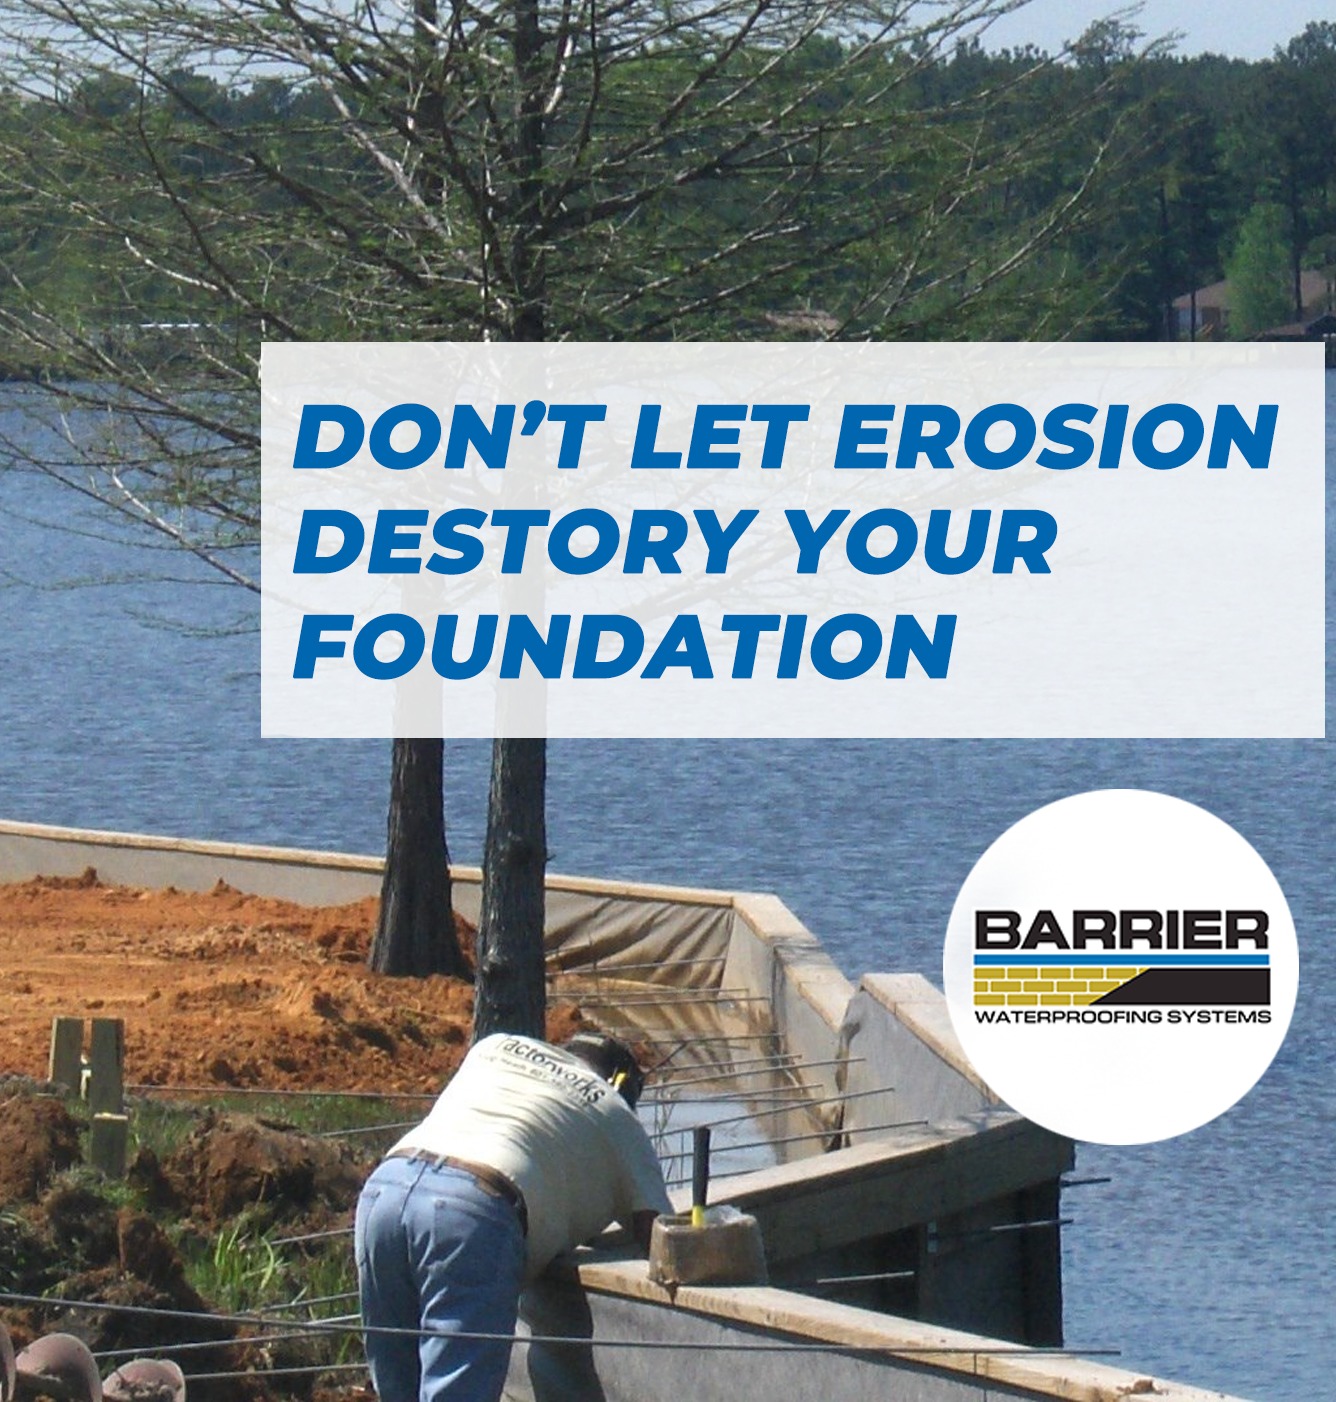 Erosion control measures to prevent foundation erosion damage